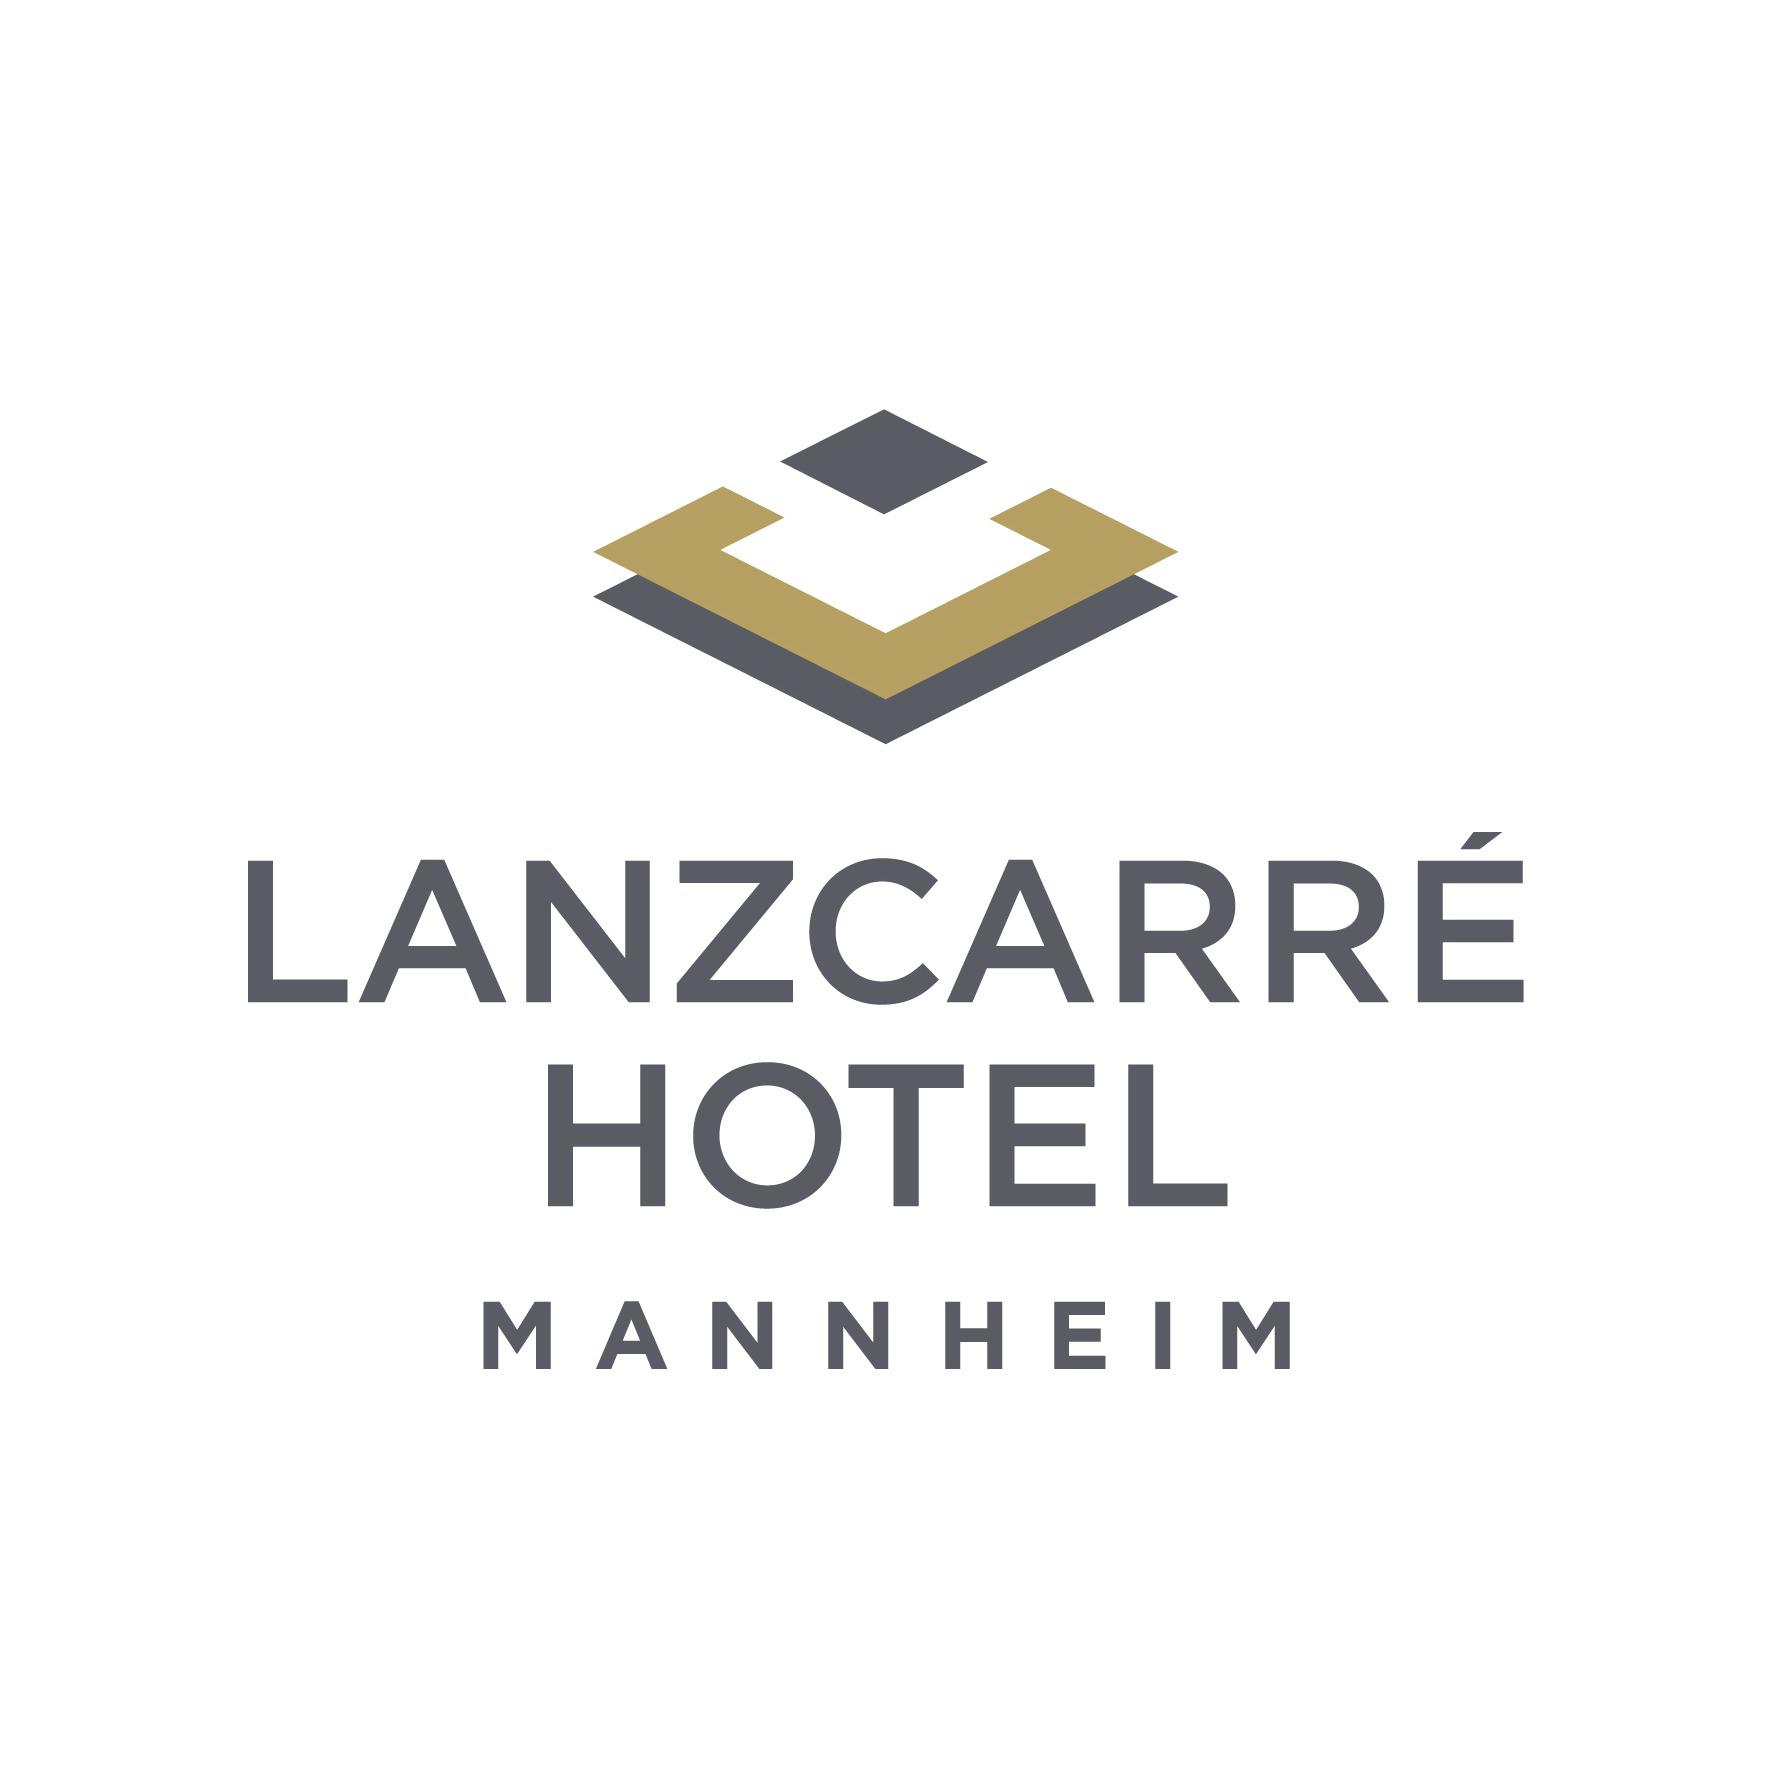 LanzCarré Hotel Mannheim, a member of Radisson Individuals